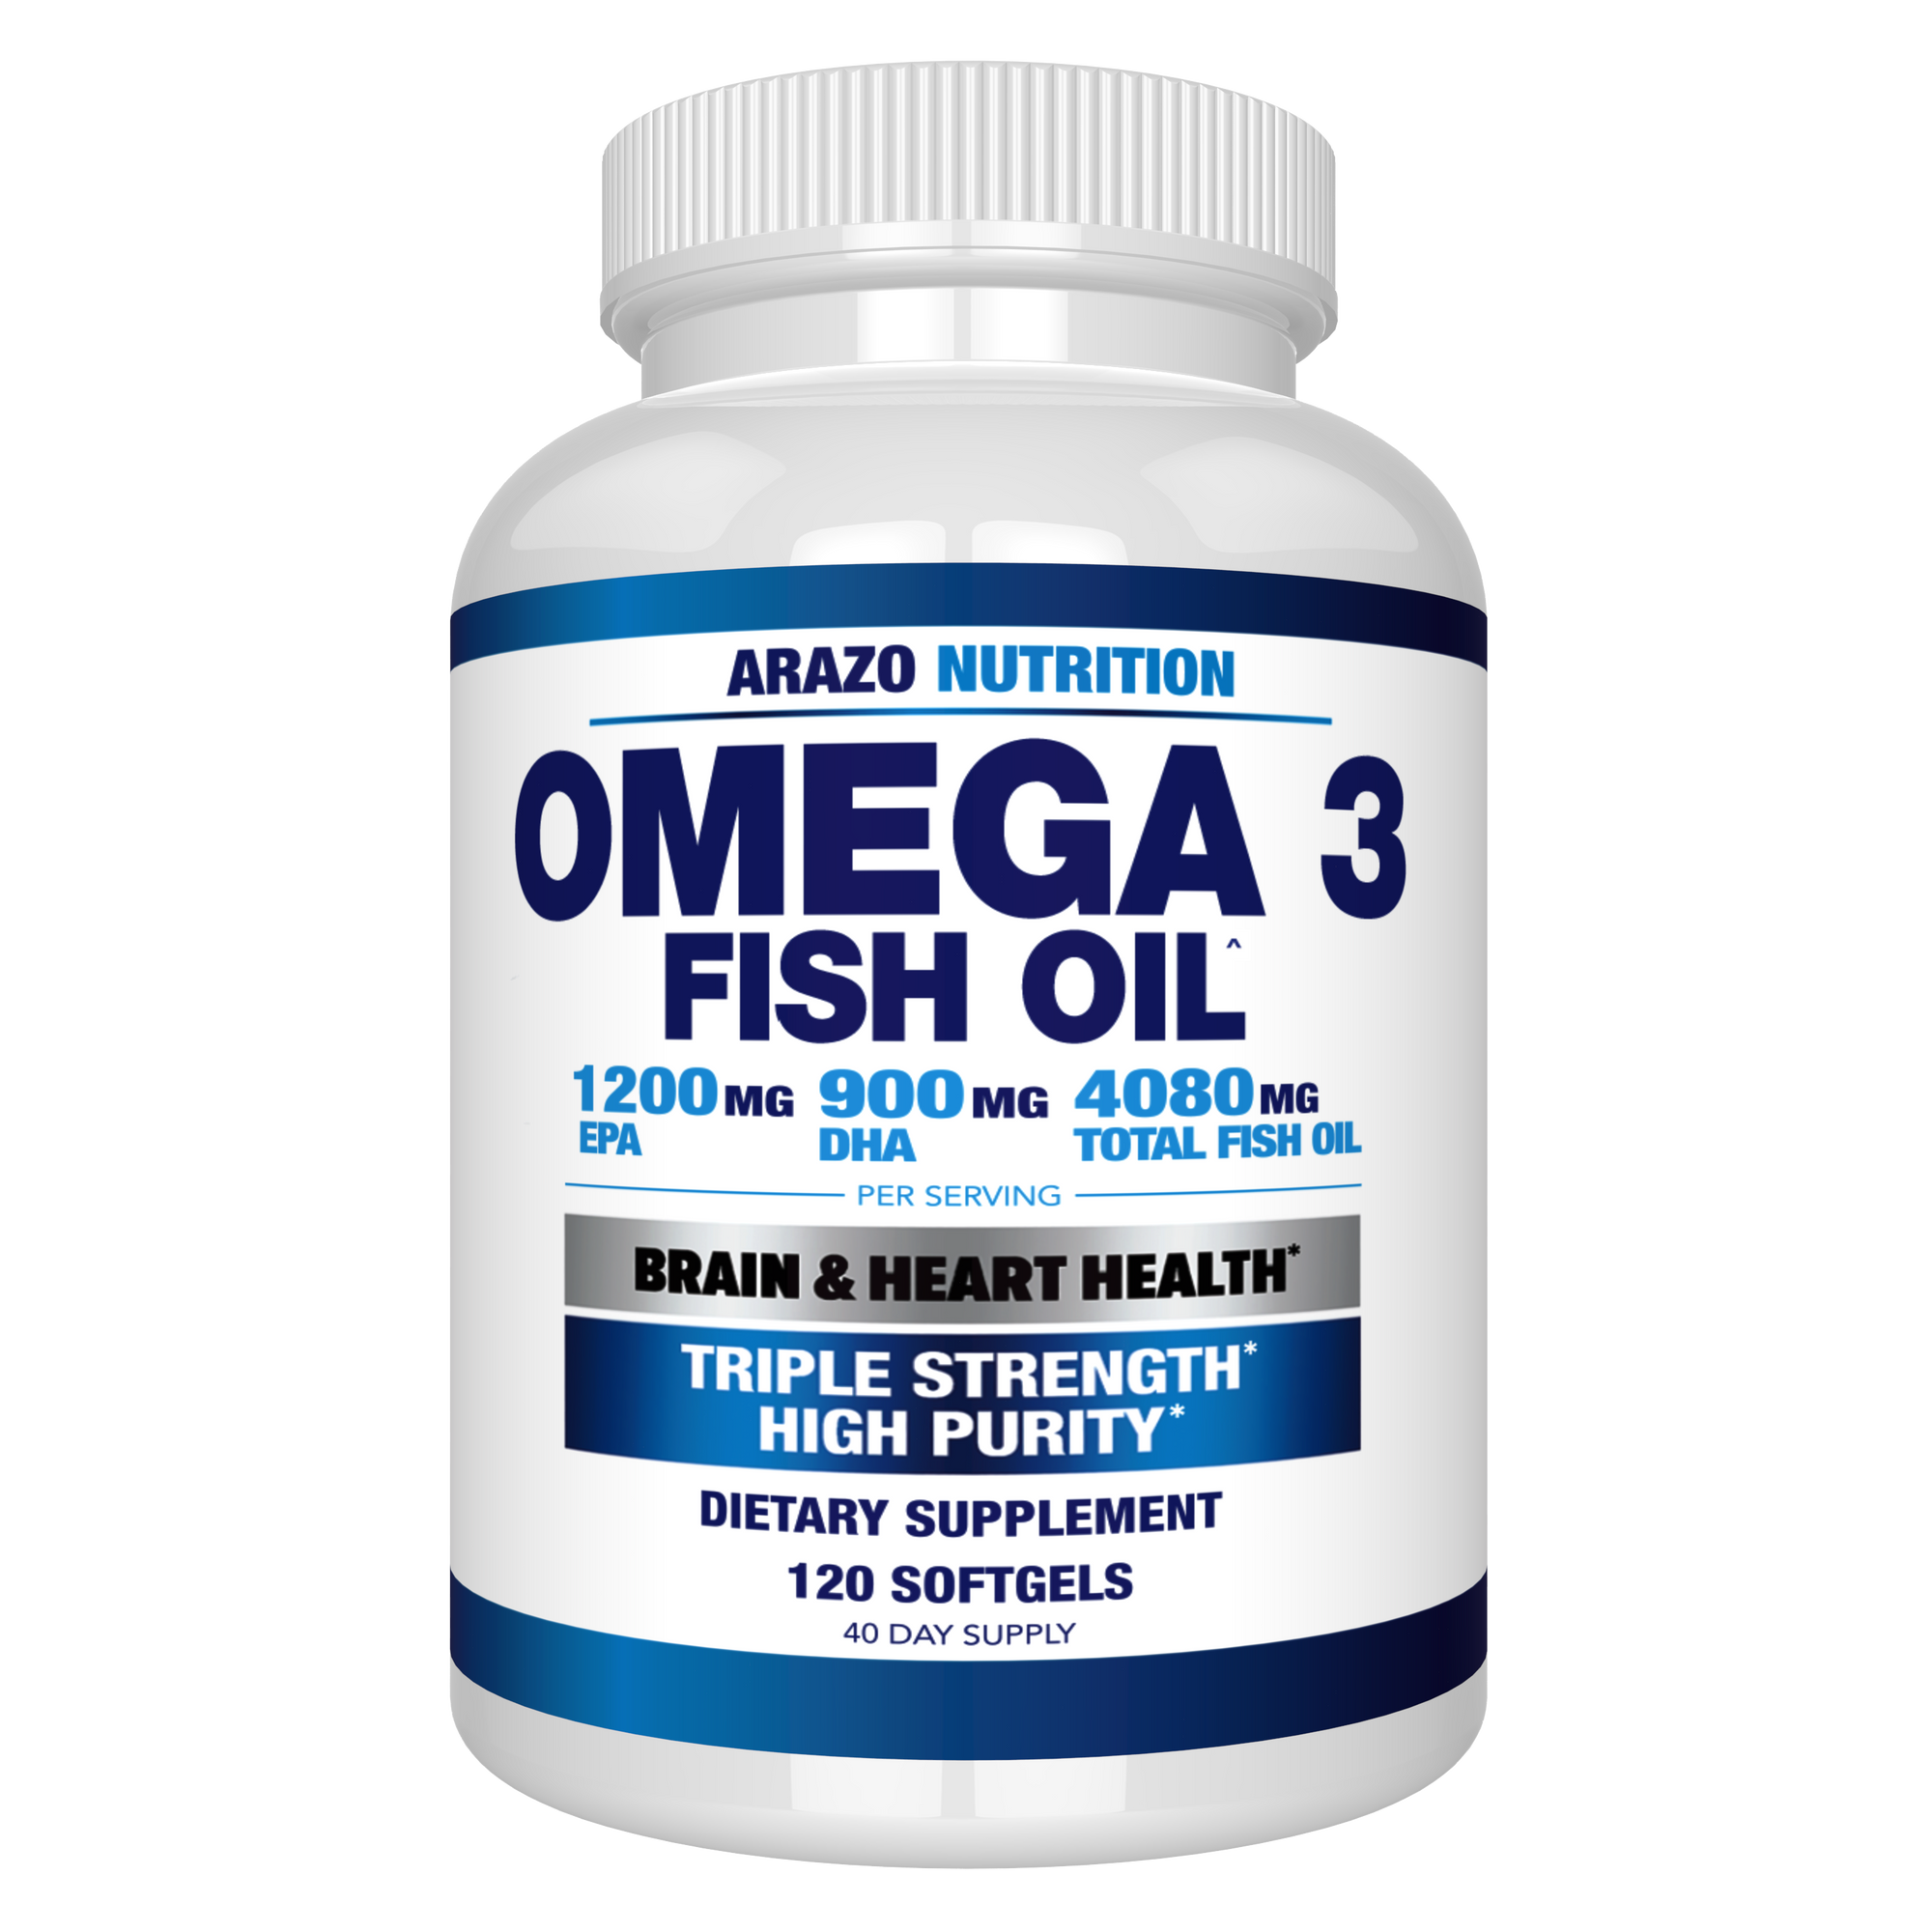 Omega 3 Fish Oil - Arazo Nutrition